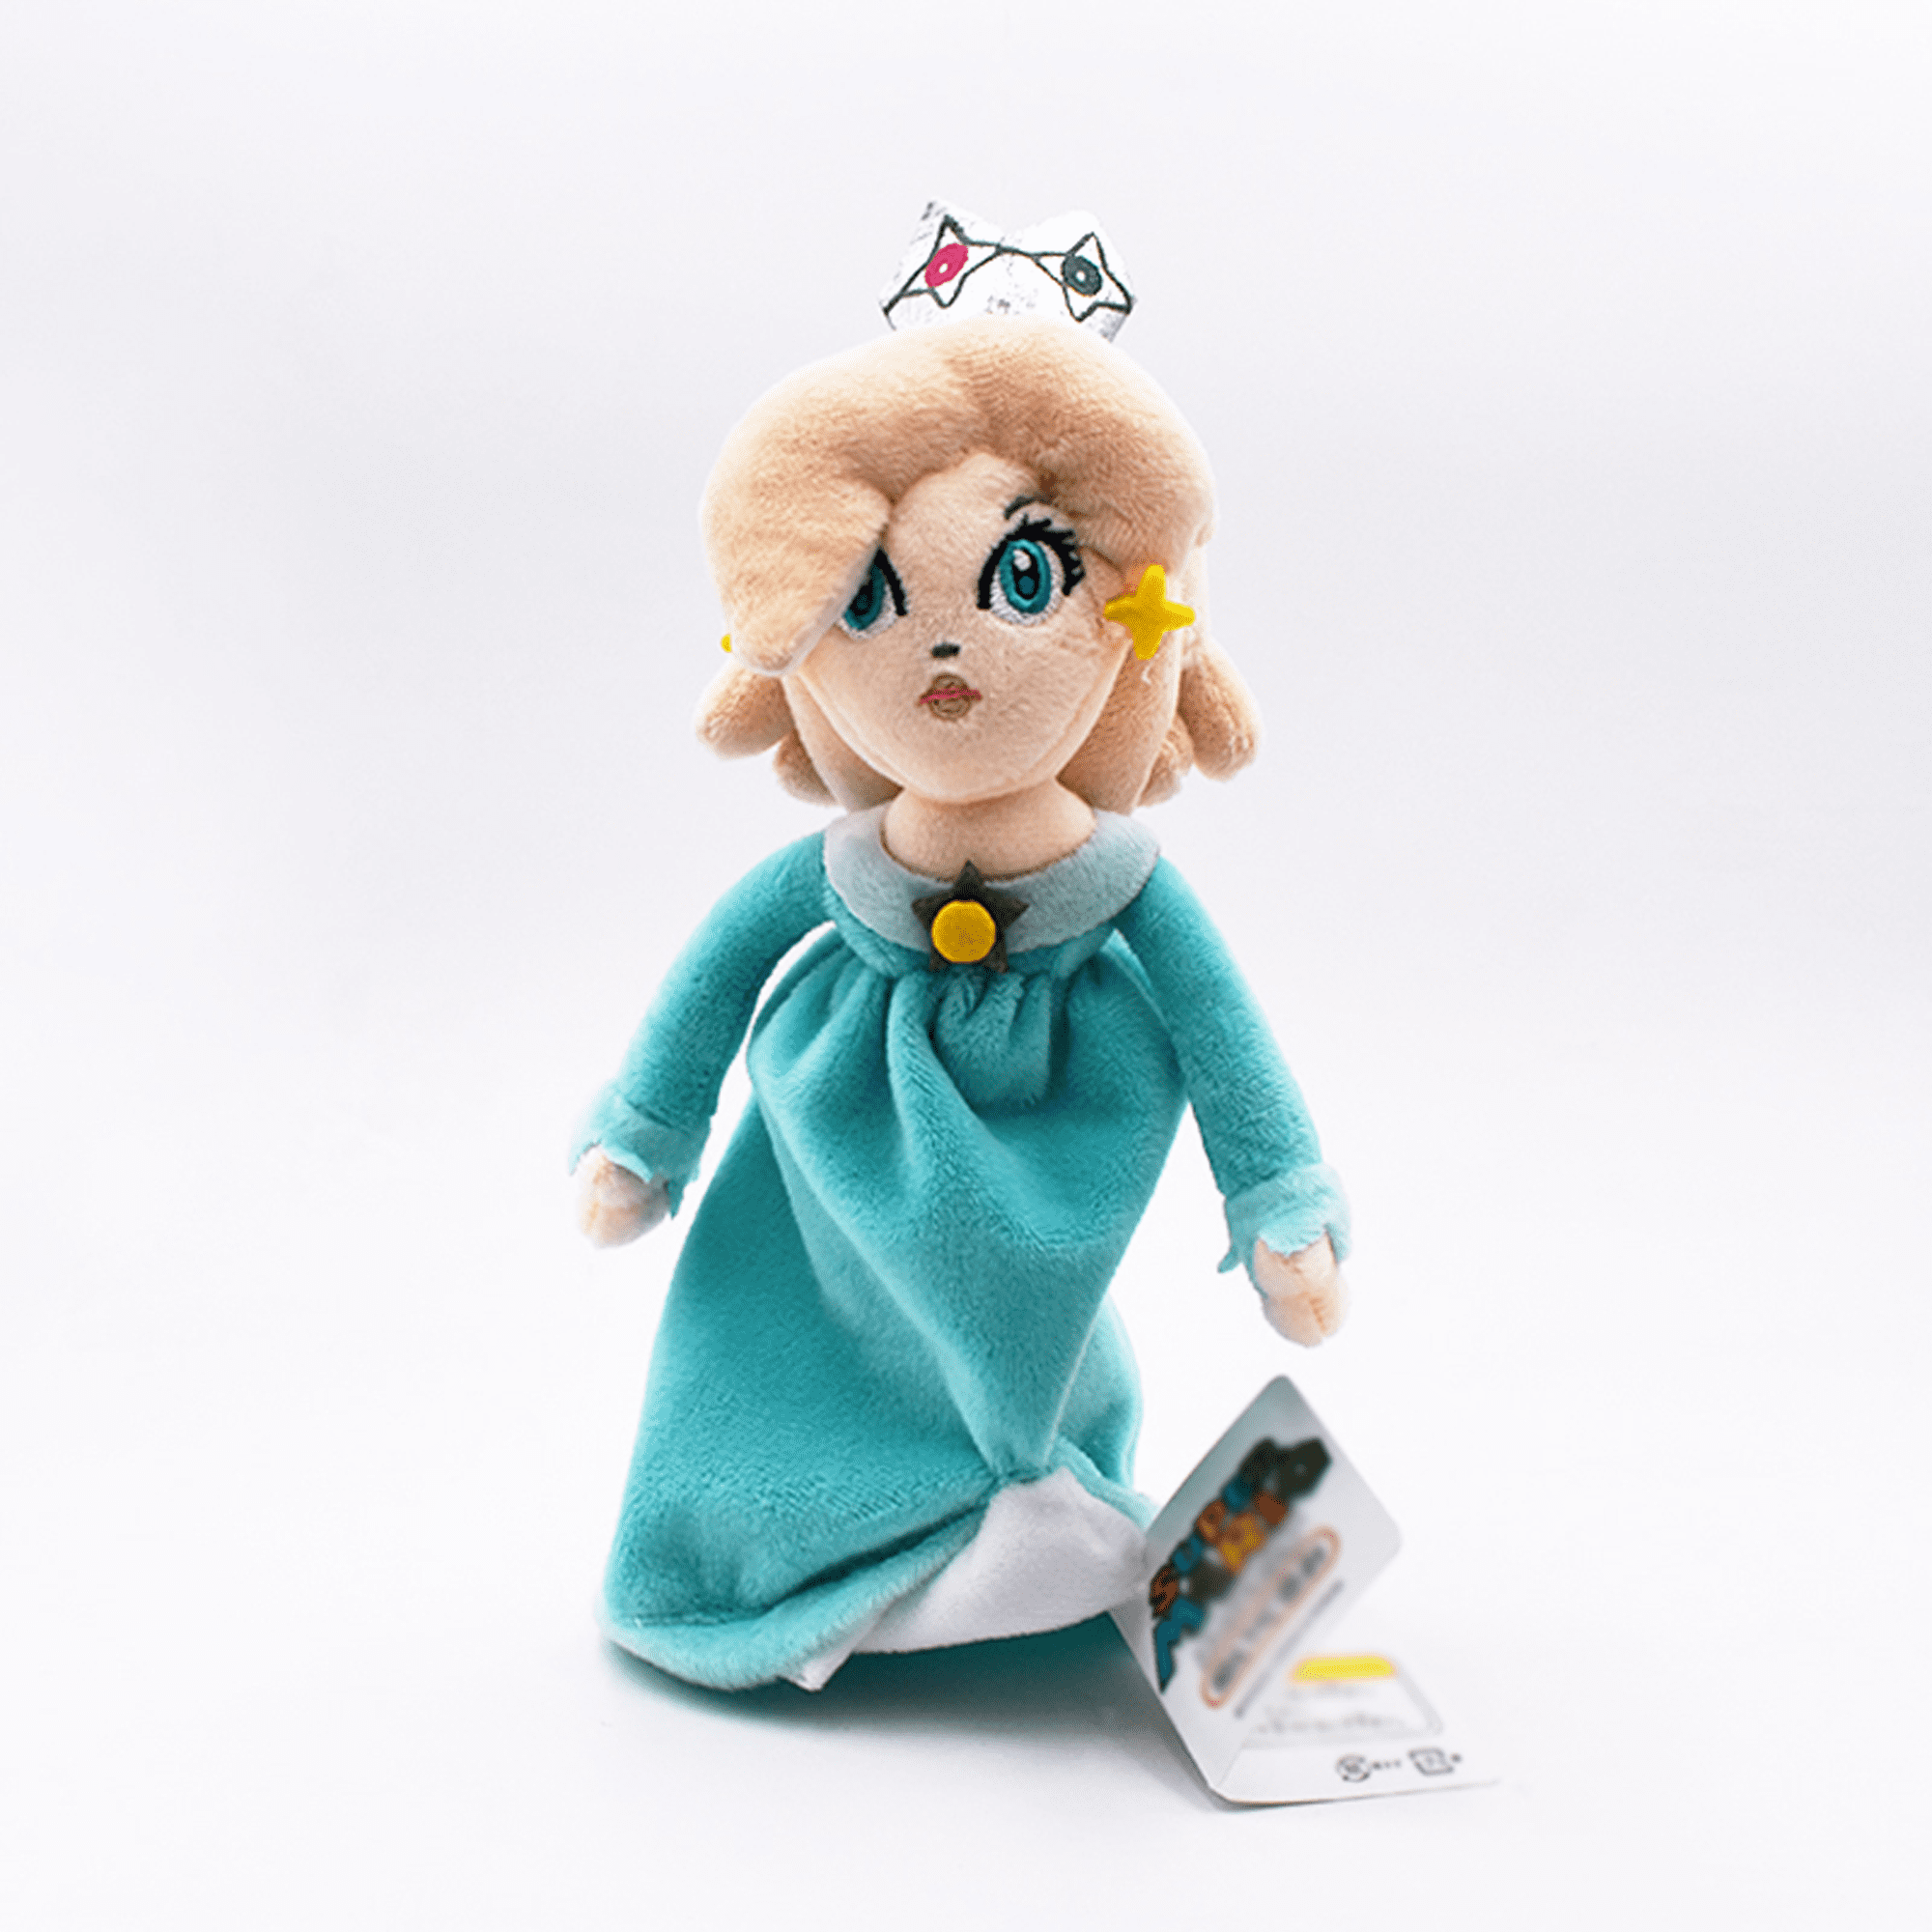 Plush Doll Figure Princess Rosalina 8" Kids Toy Gift Hot New Super Mario Bros